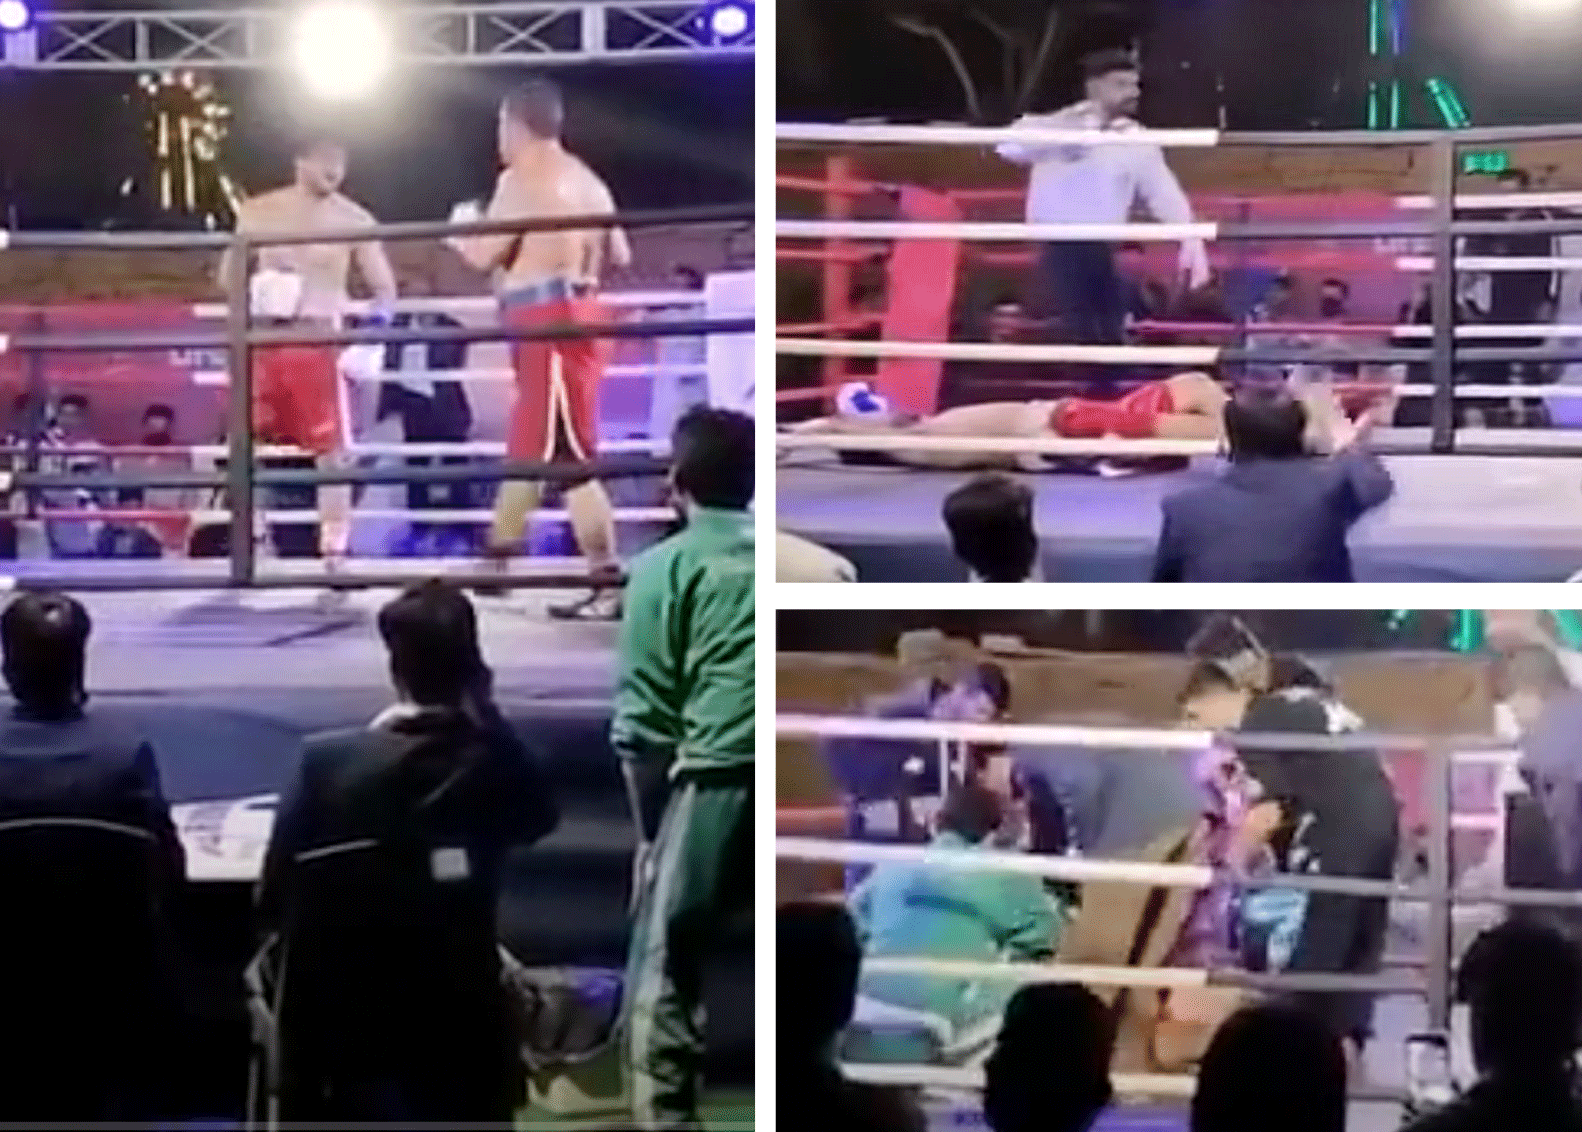 Kickbokser (33) dood na hevige knock-out tijdens bokswedstrijd (video)